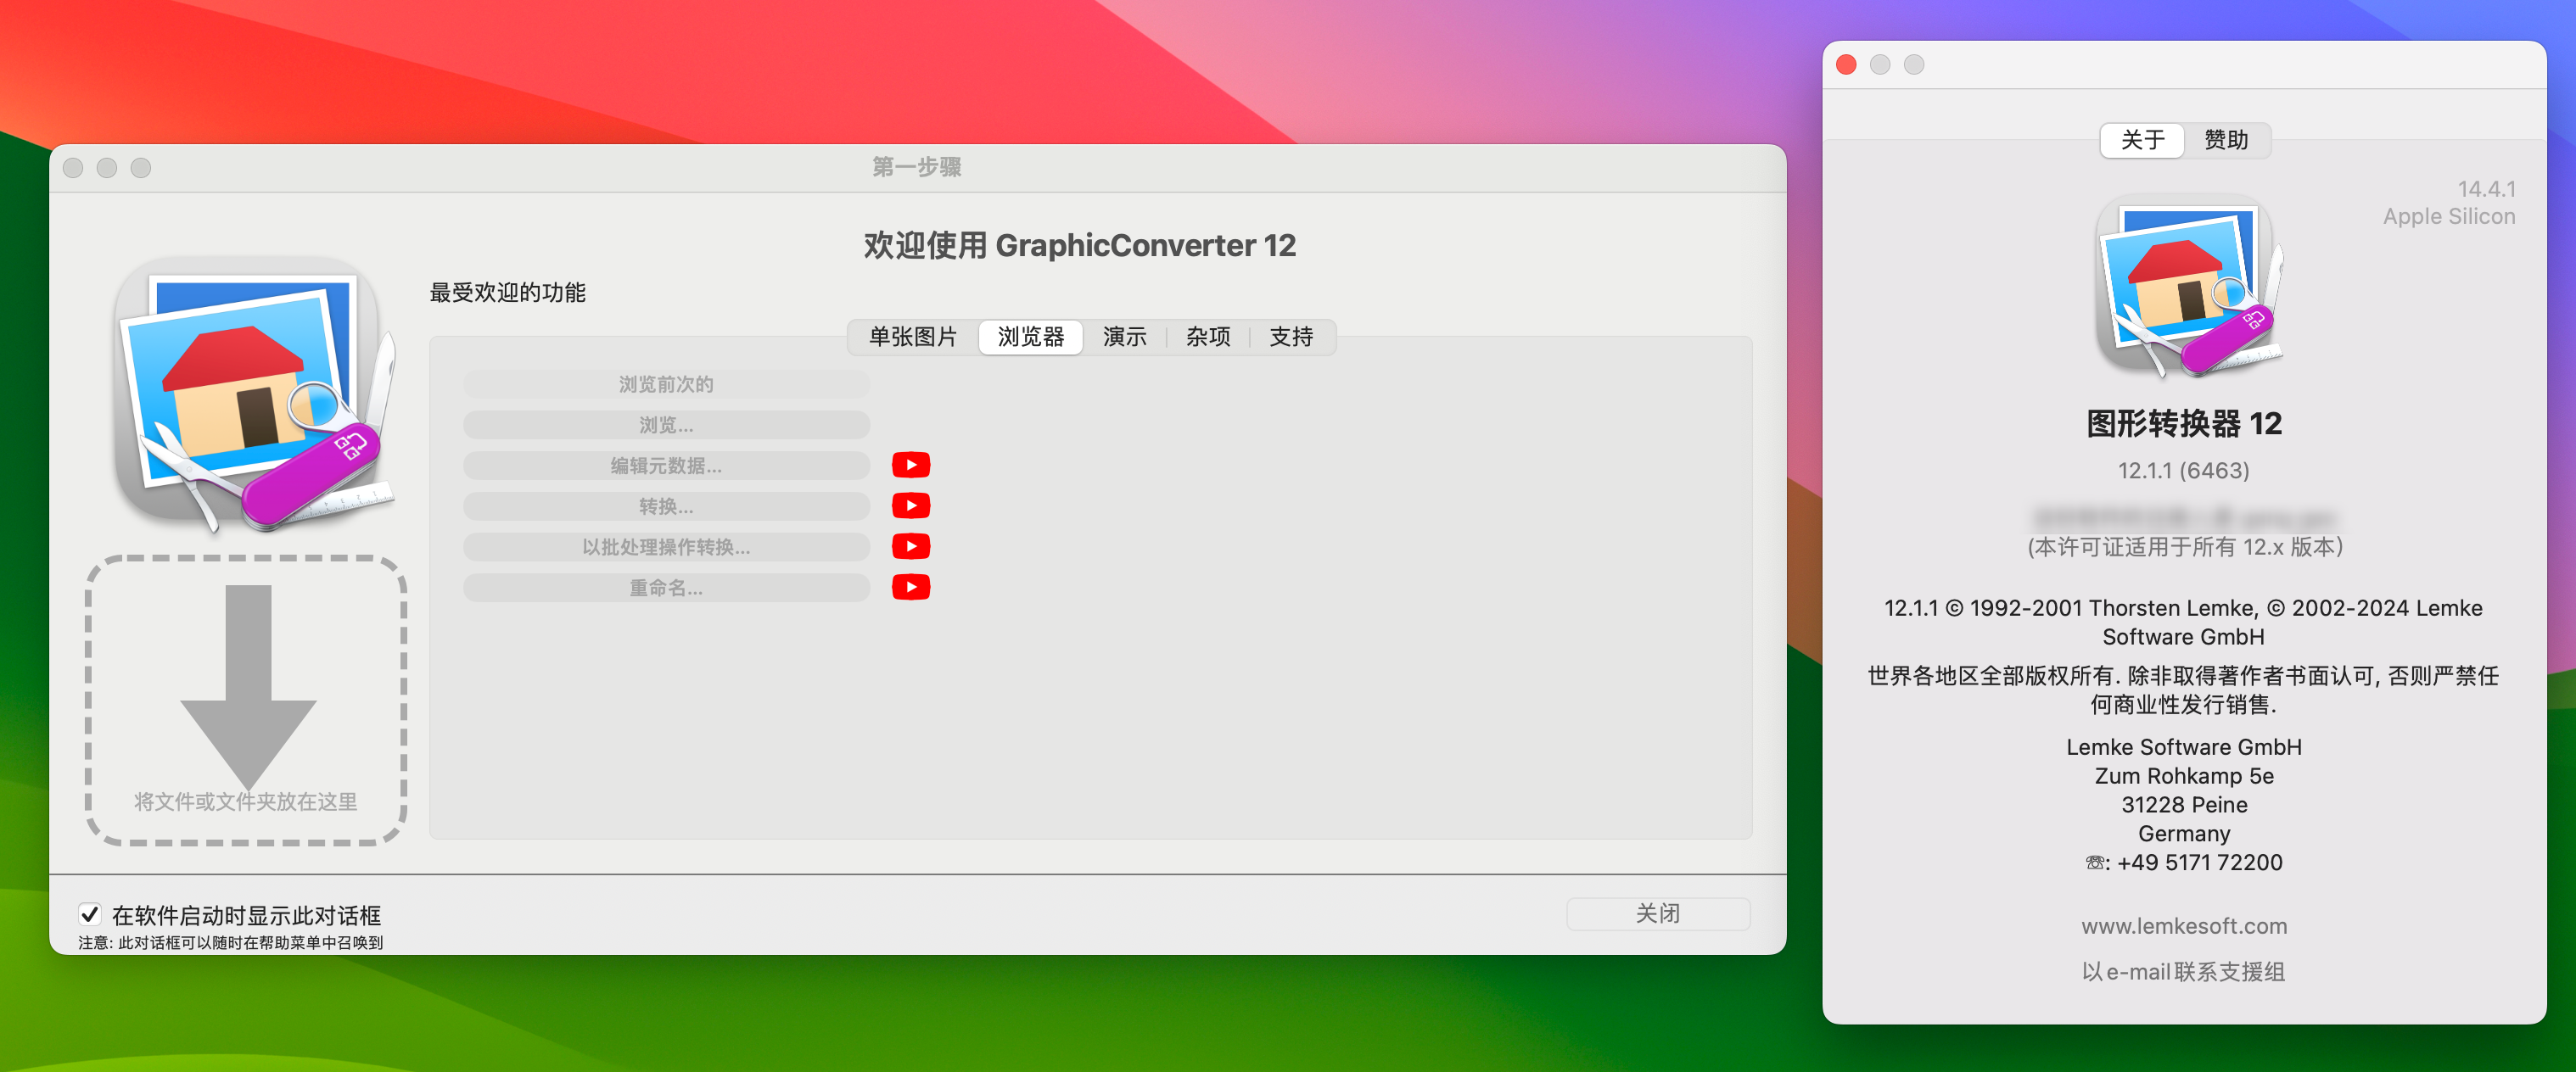 GraphicConverter 12 for Mac v12.1.2.6497 图片浏览器 免激活下载-1